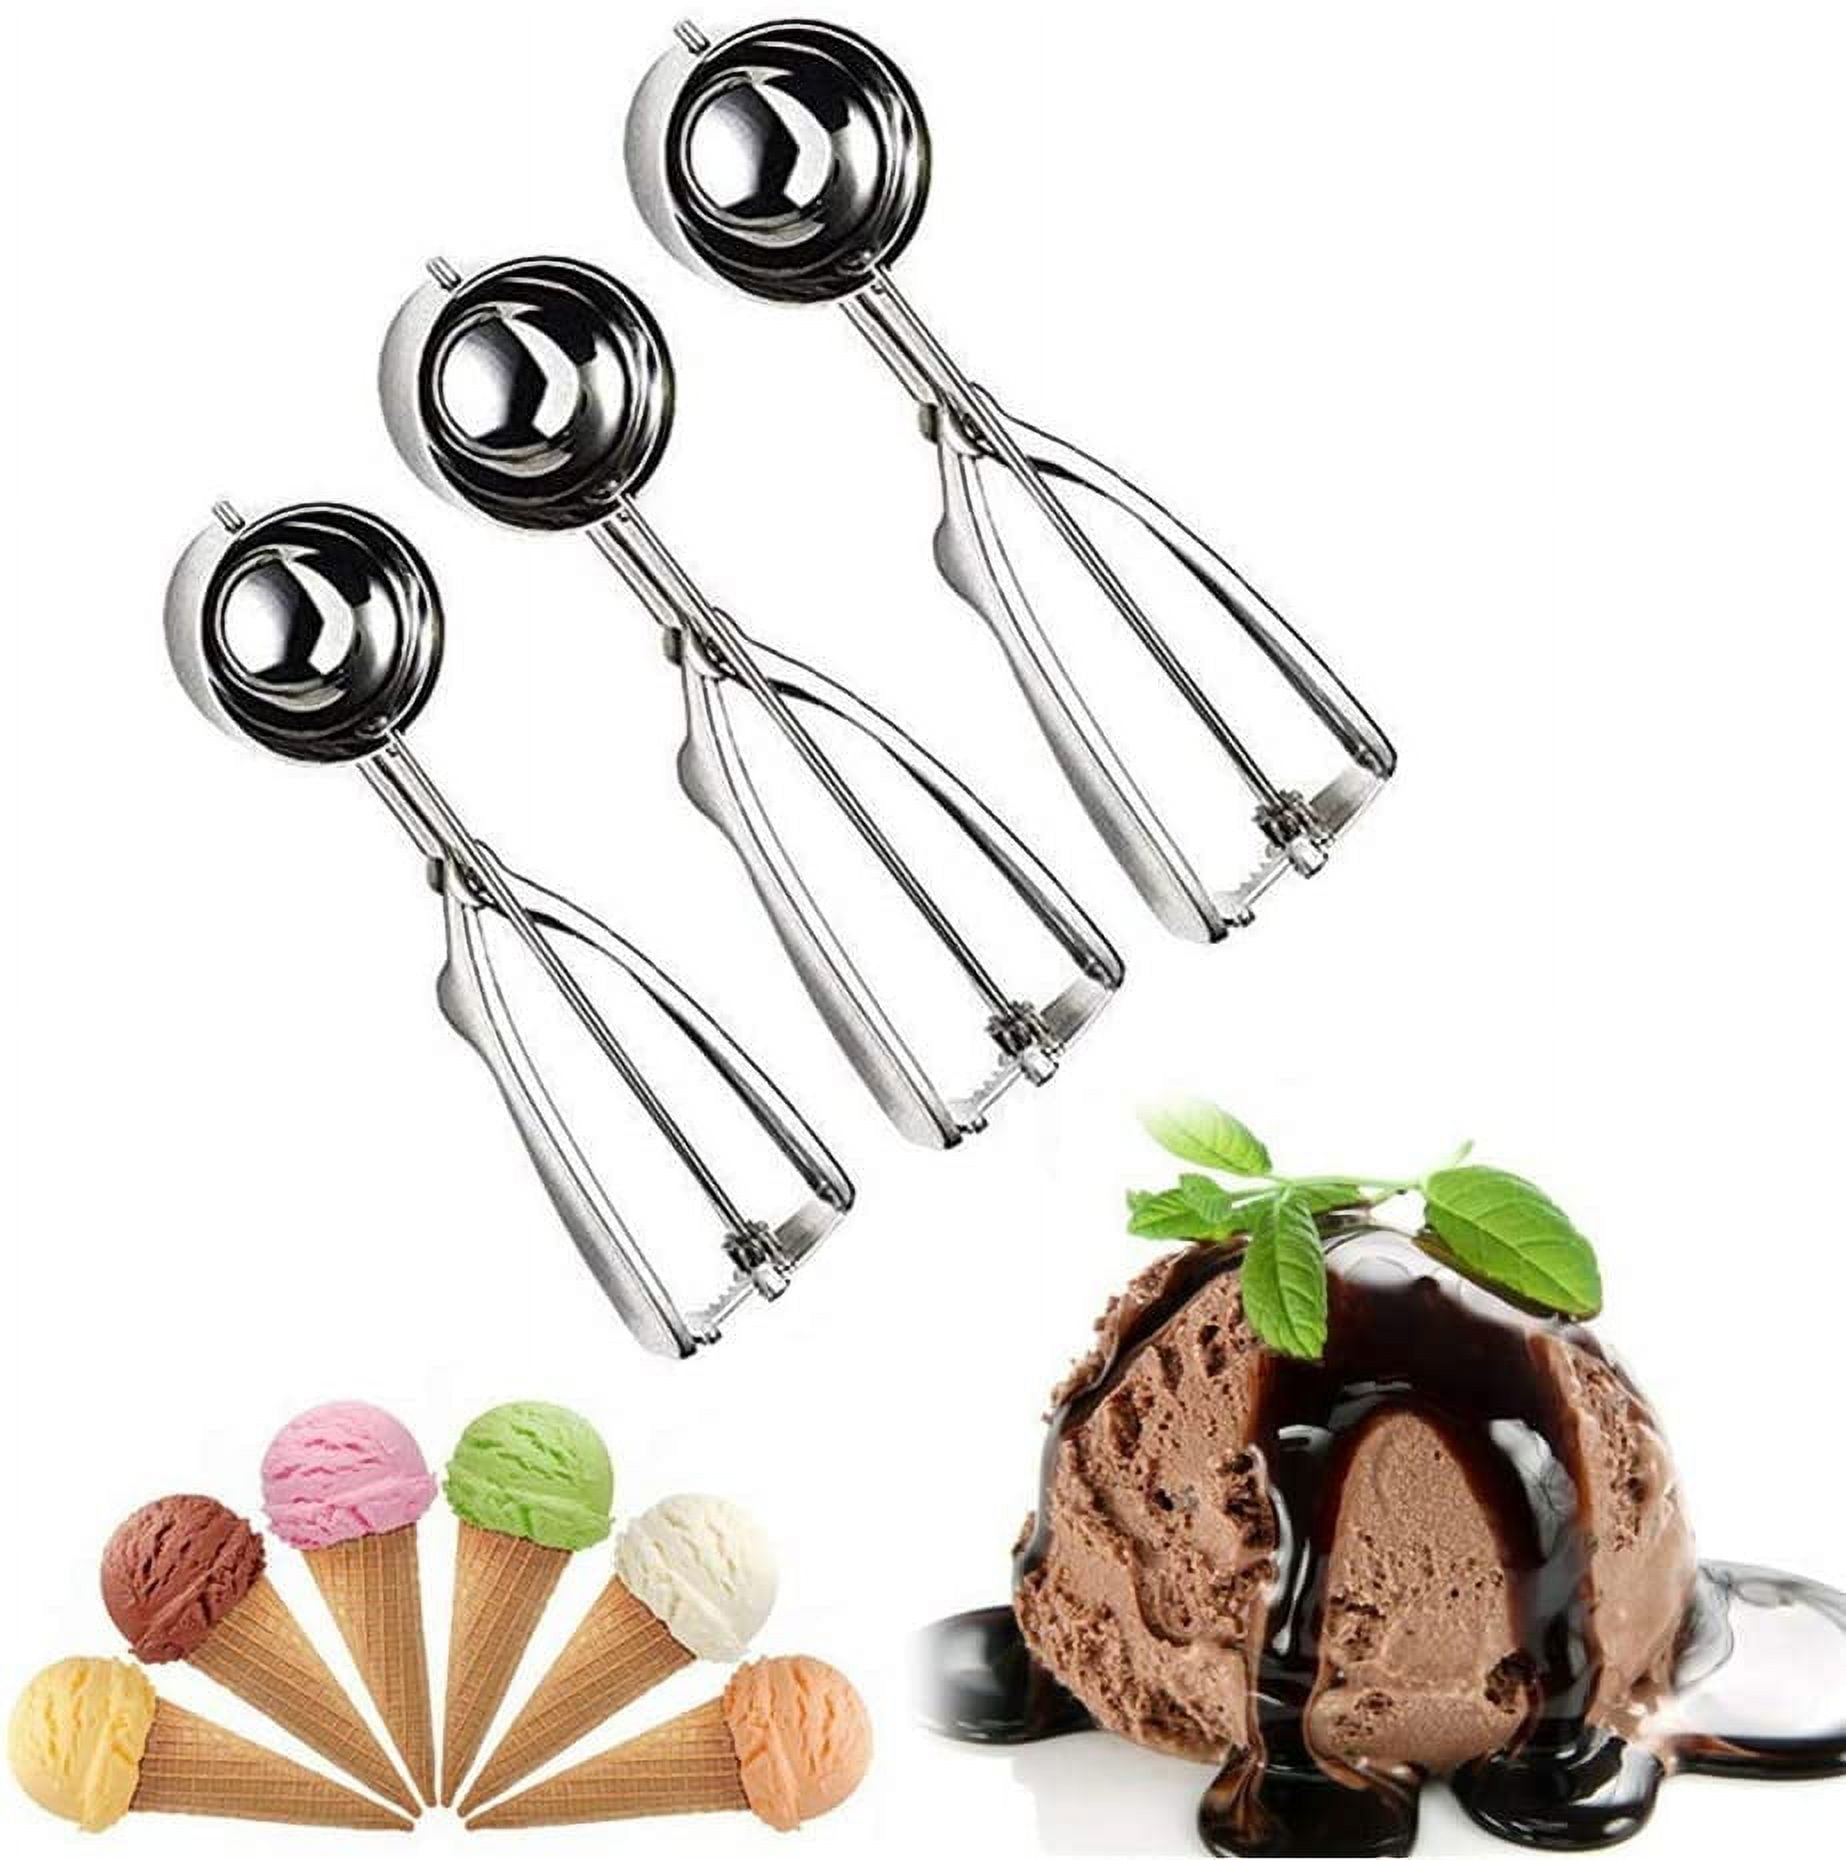 Ice Cream Scoop Set, 3 PCS 18/8 Stainless Steel Cookie Scoop